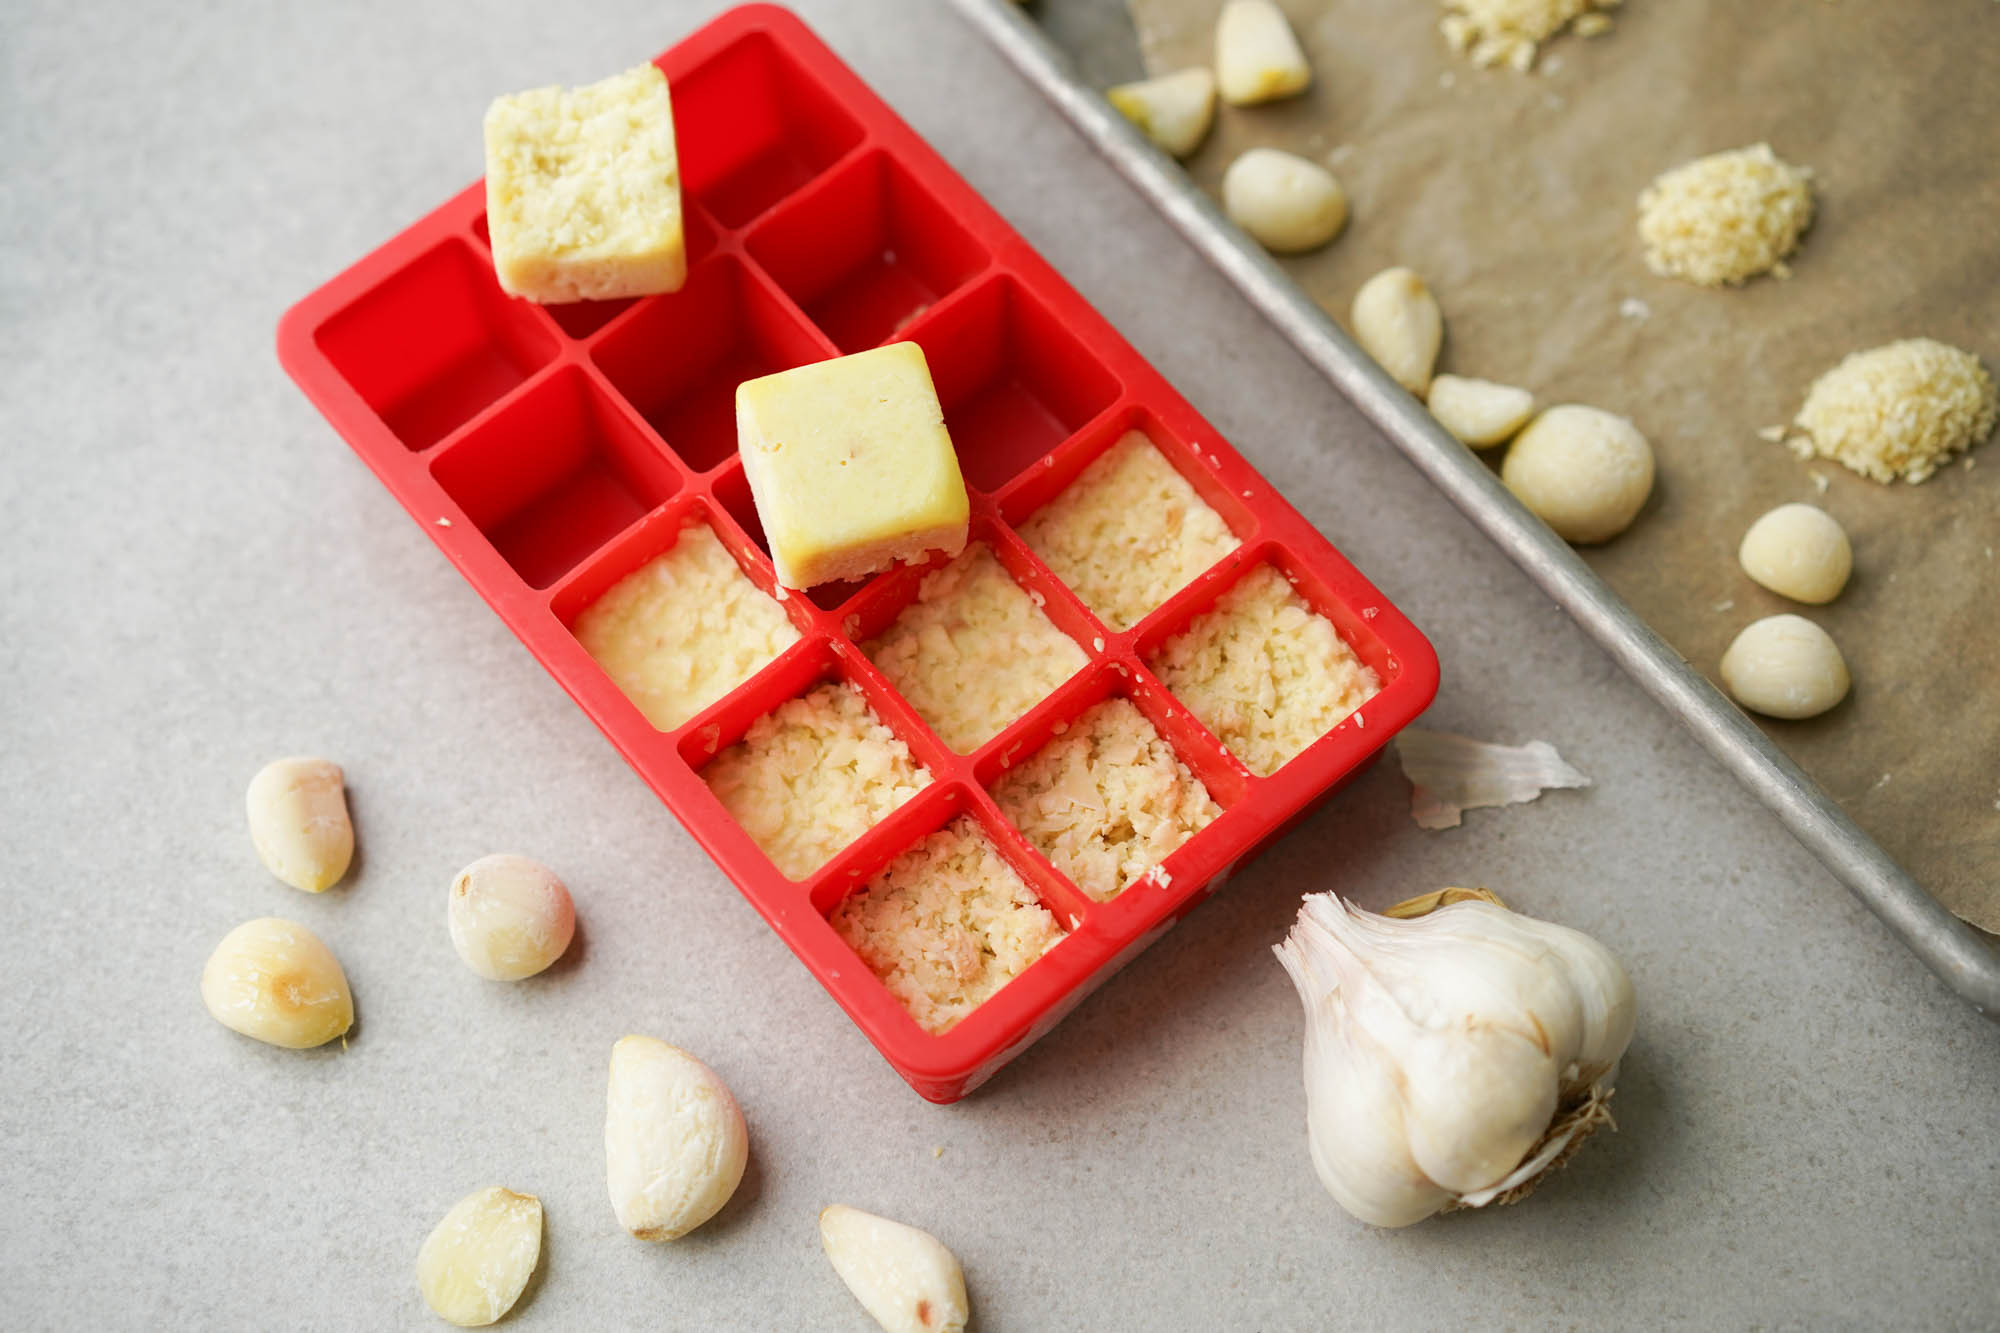 How To Store Garlic In Freezer